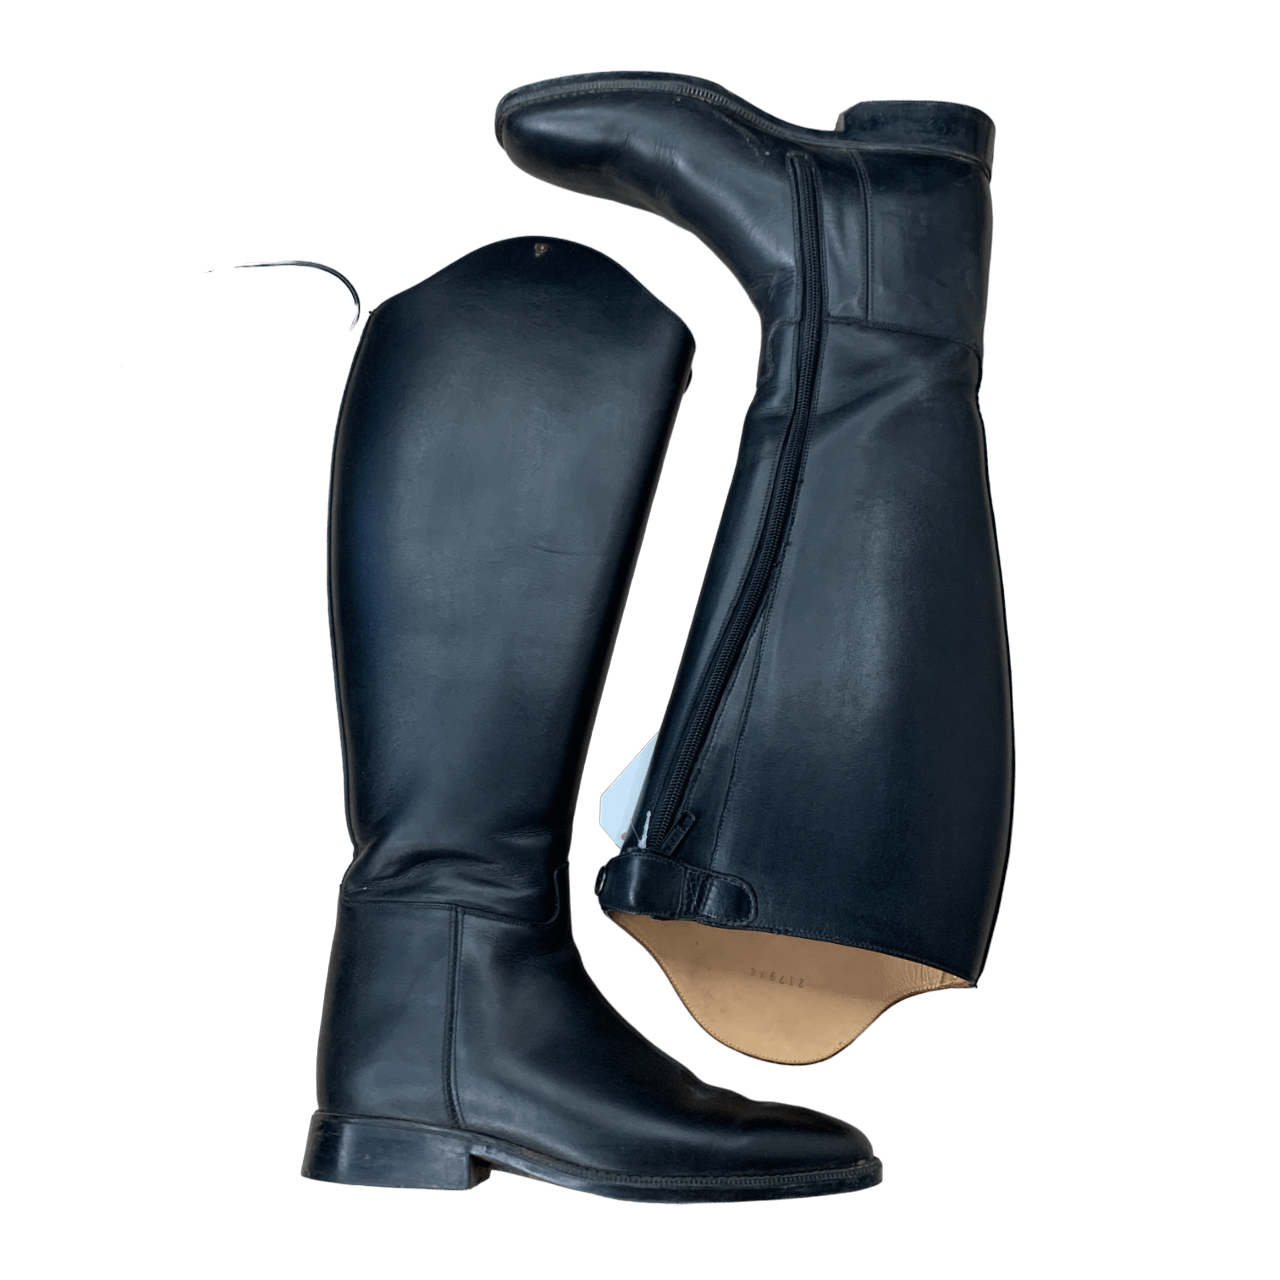 Petrie Custom 'Elegance' Dressage Boots in Black - EU41 (US 8/9)